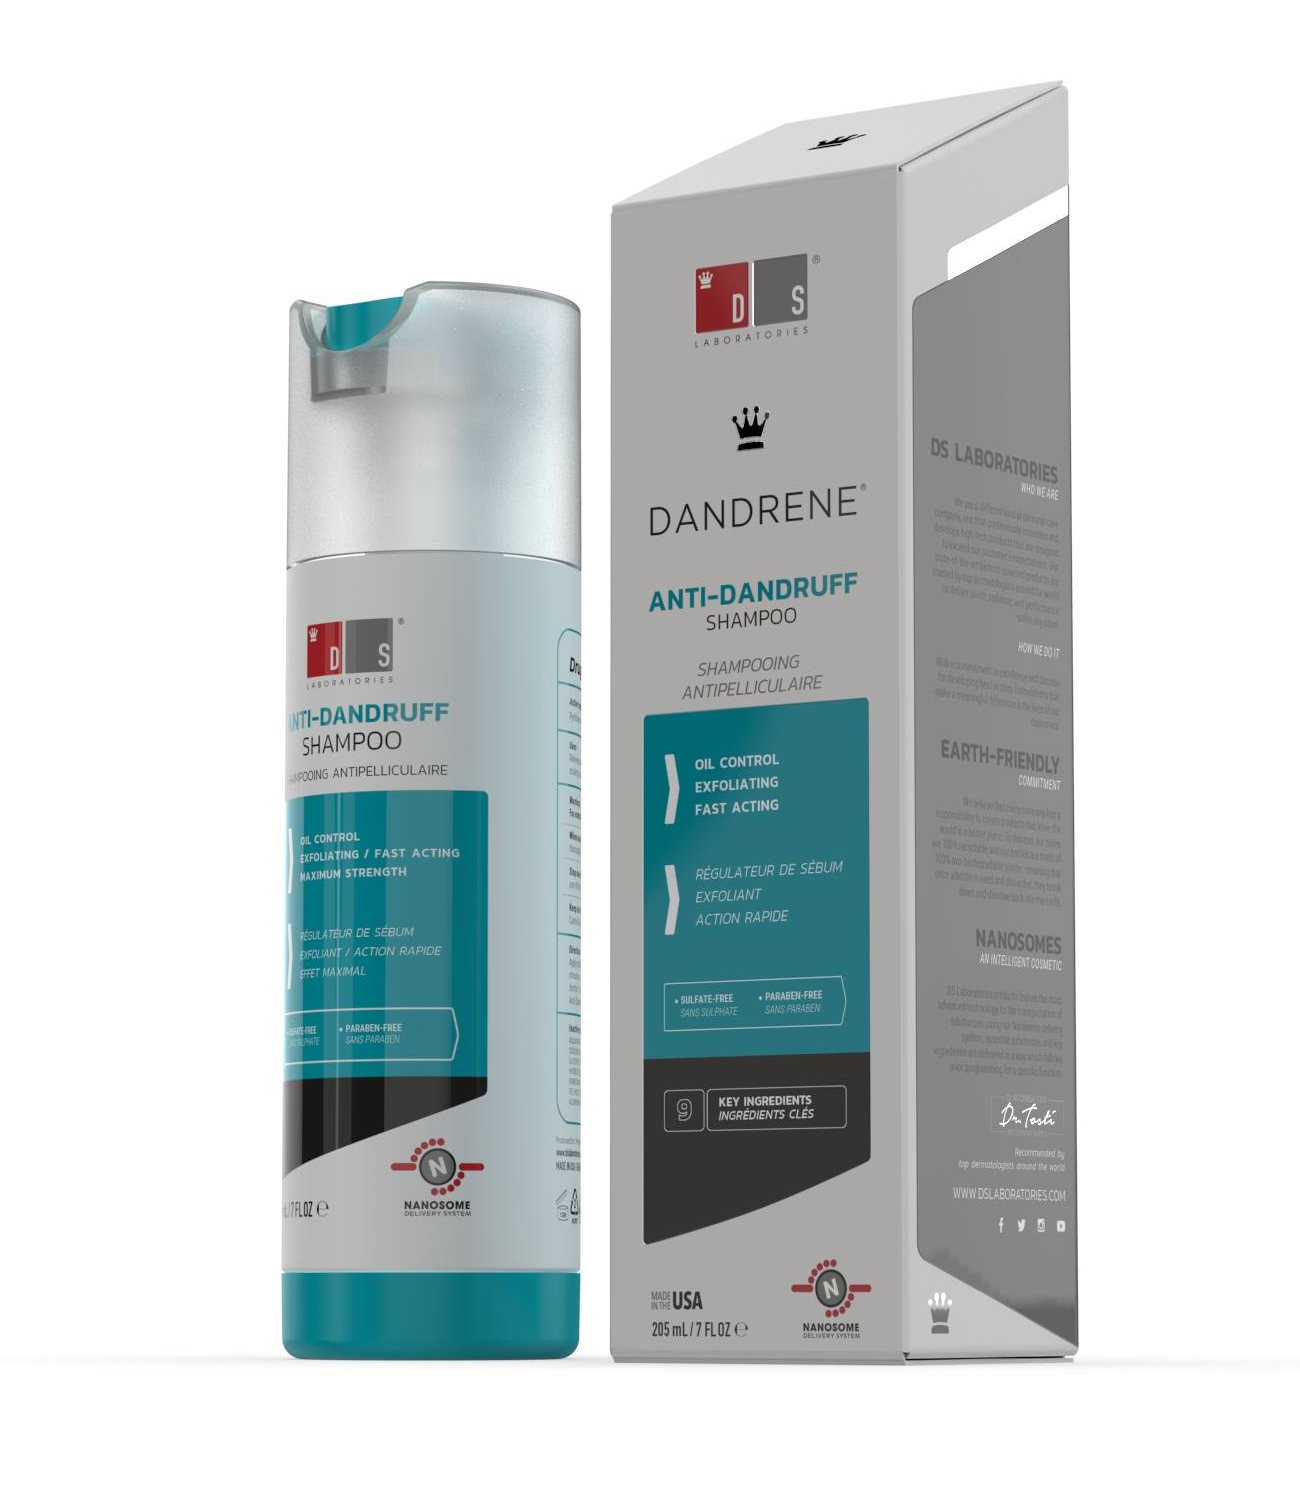 Dandrene | Shampoo anticaspa esfoliante